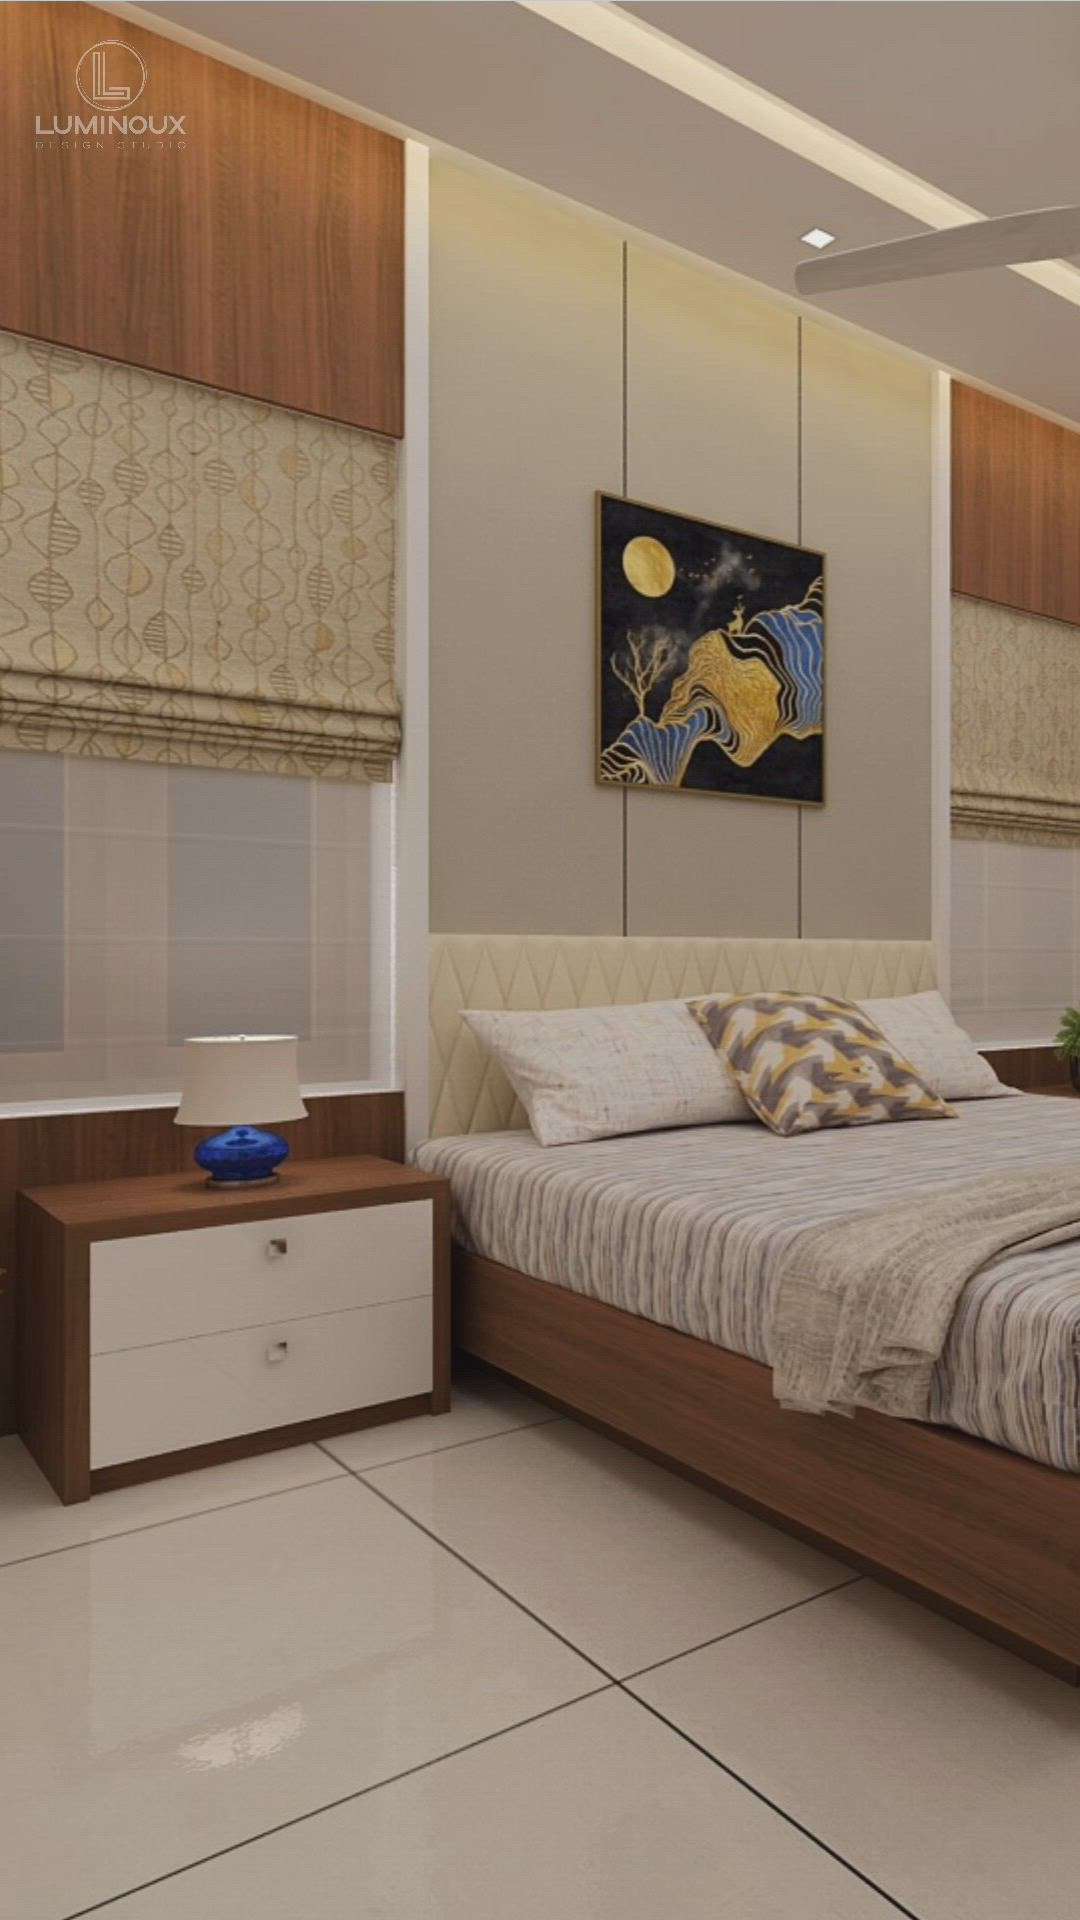 Bedroom Design 💫
#bedroomdesign #bedroomdecor #sweethome #architectureinteriors #3dvisualization #indoorplants #kolo #facebook #mallu